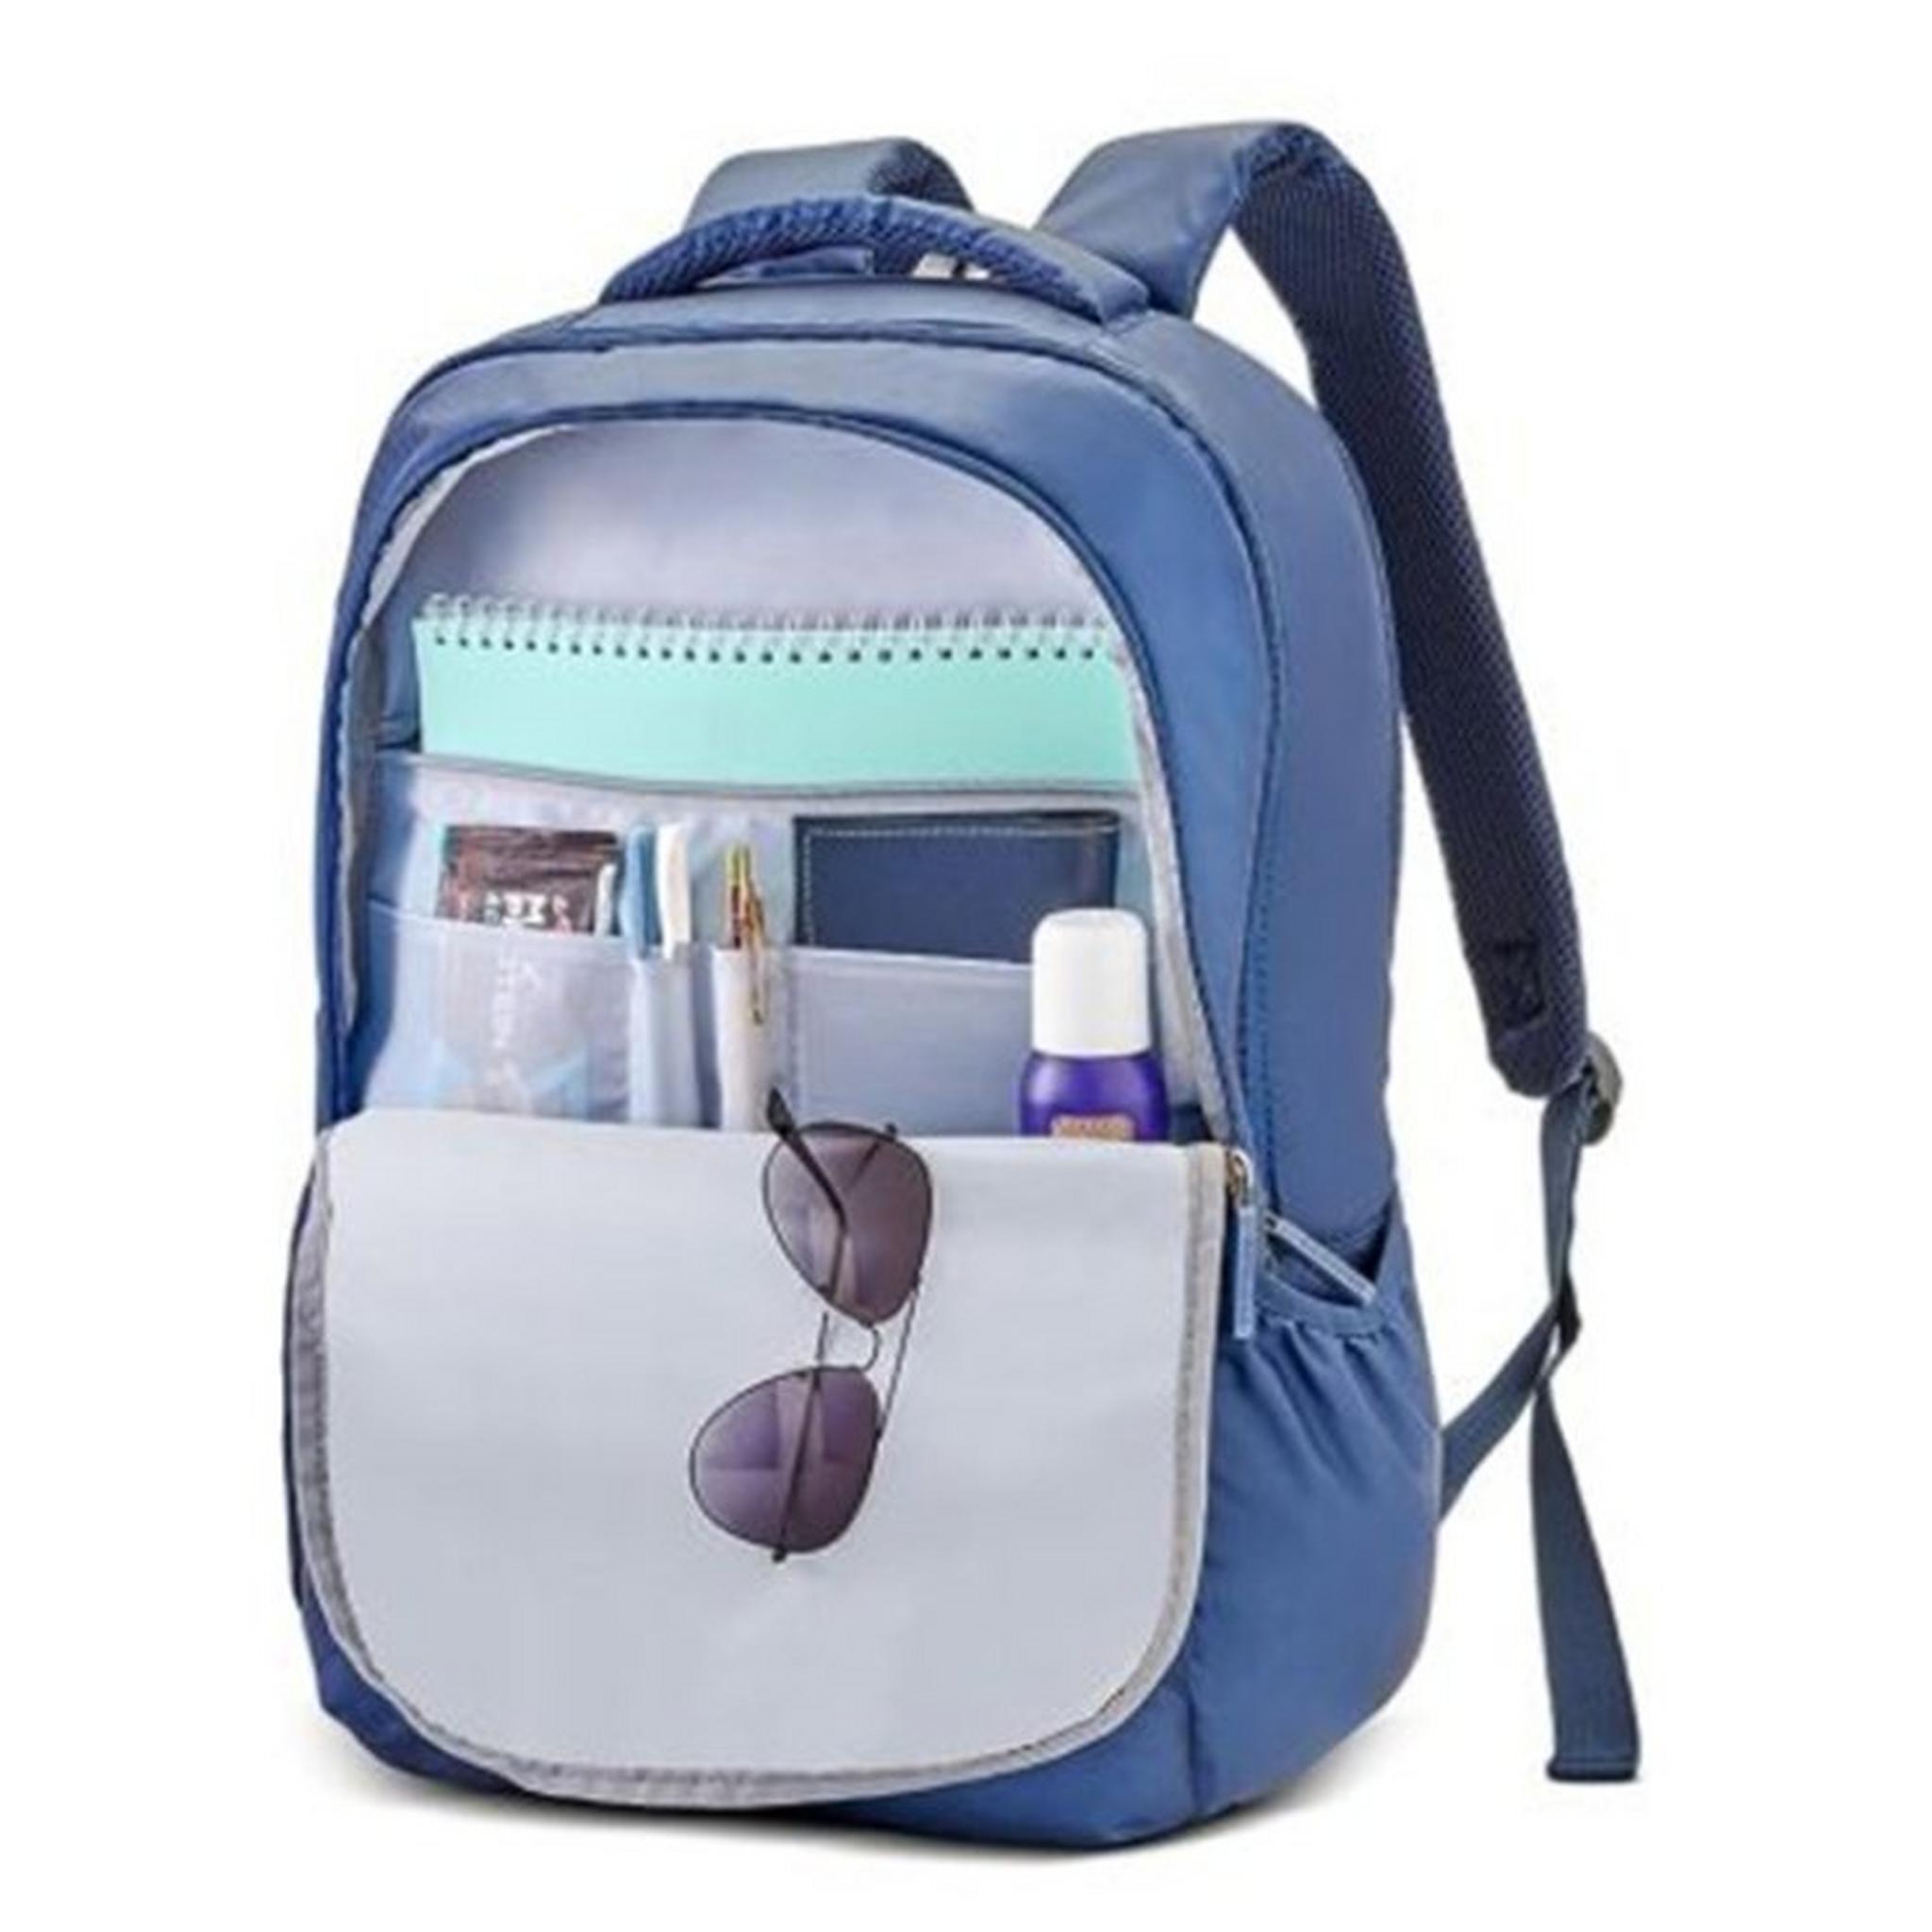 American Tourister Slate 2.0 Laptop Backpack, LU6X41001 - Navy